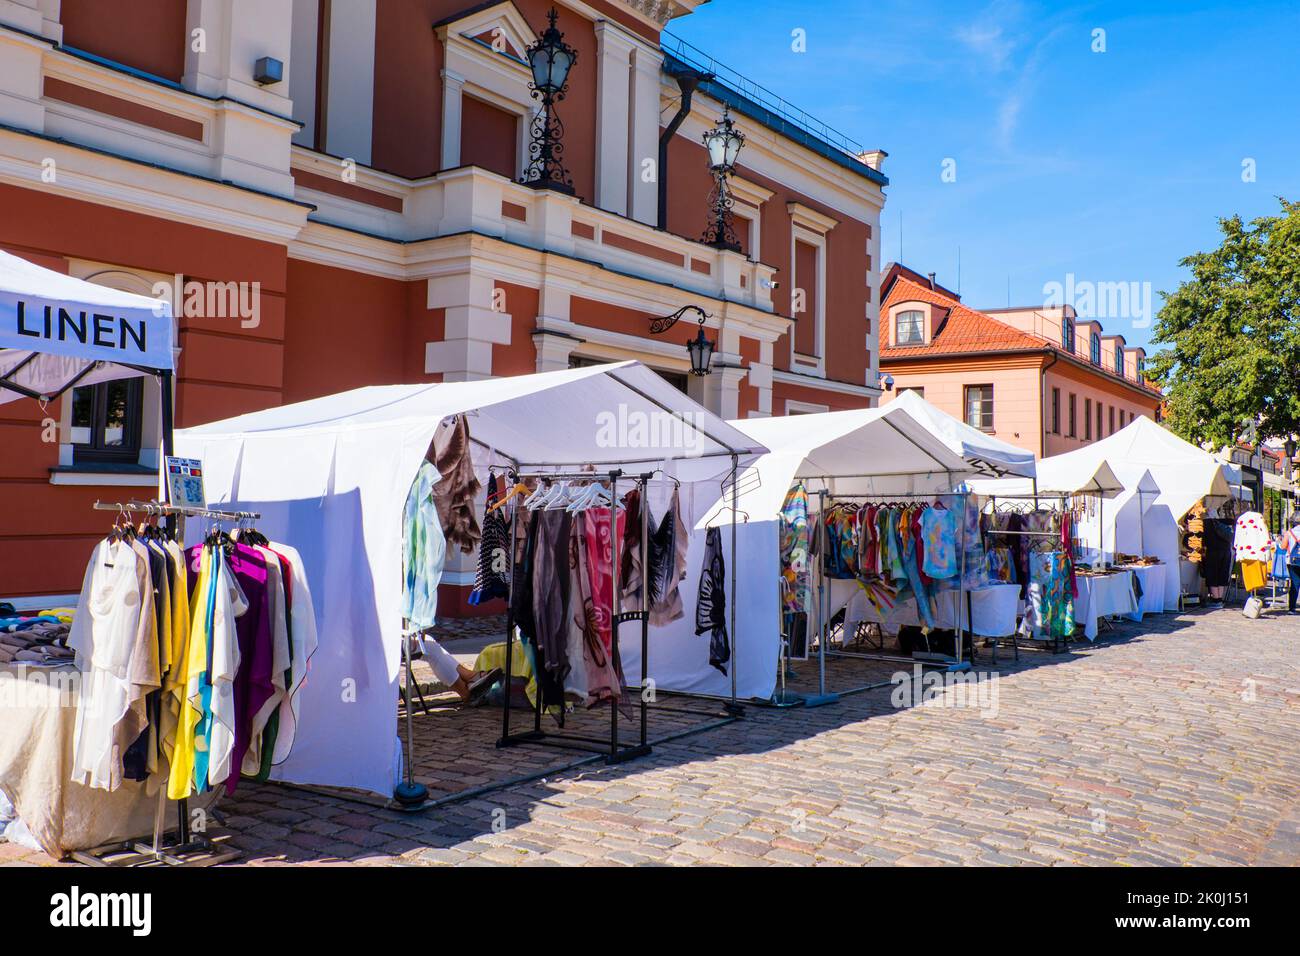 Bancarelle del mercato, Teatro aikštė, Piazza dei teatri, centro storico, Klaipeda, Lituania Foto Stock